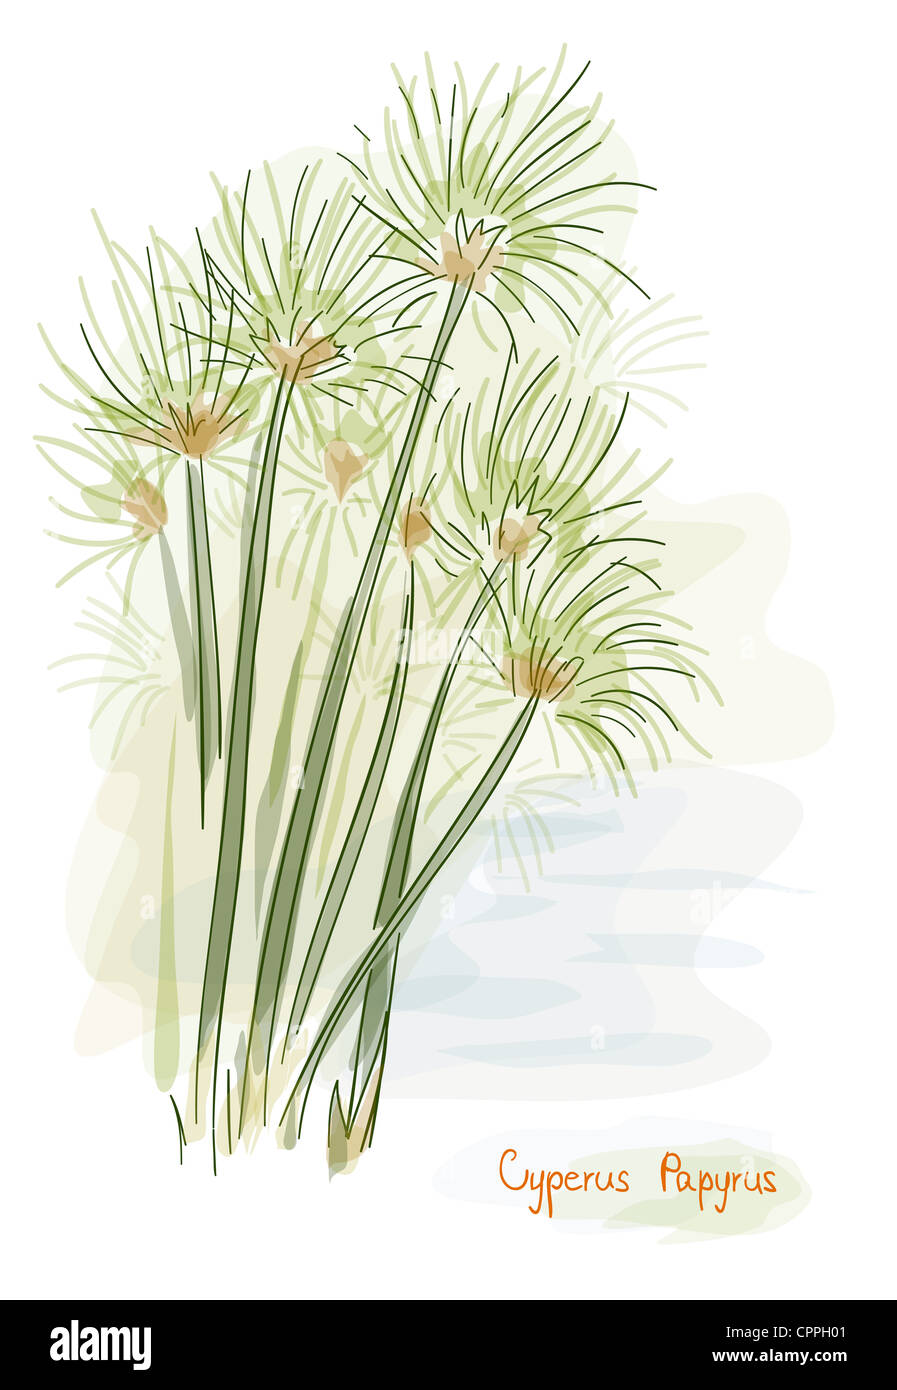 Papyrus plant. (Cyperus Papyrus) Watercolor style Stock Photo - Alamy